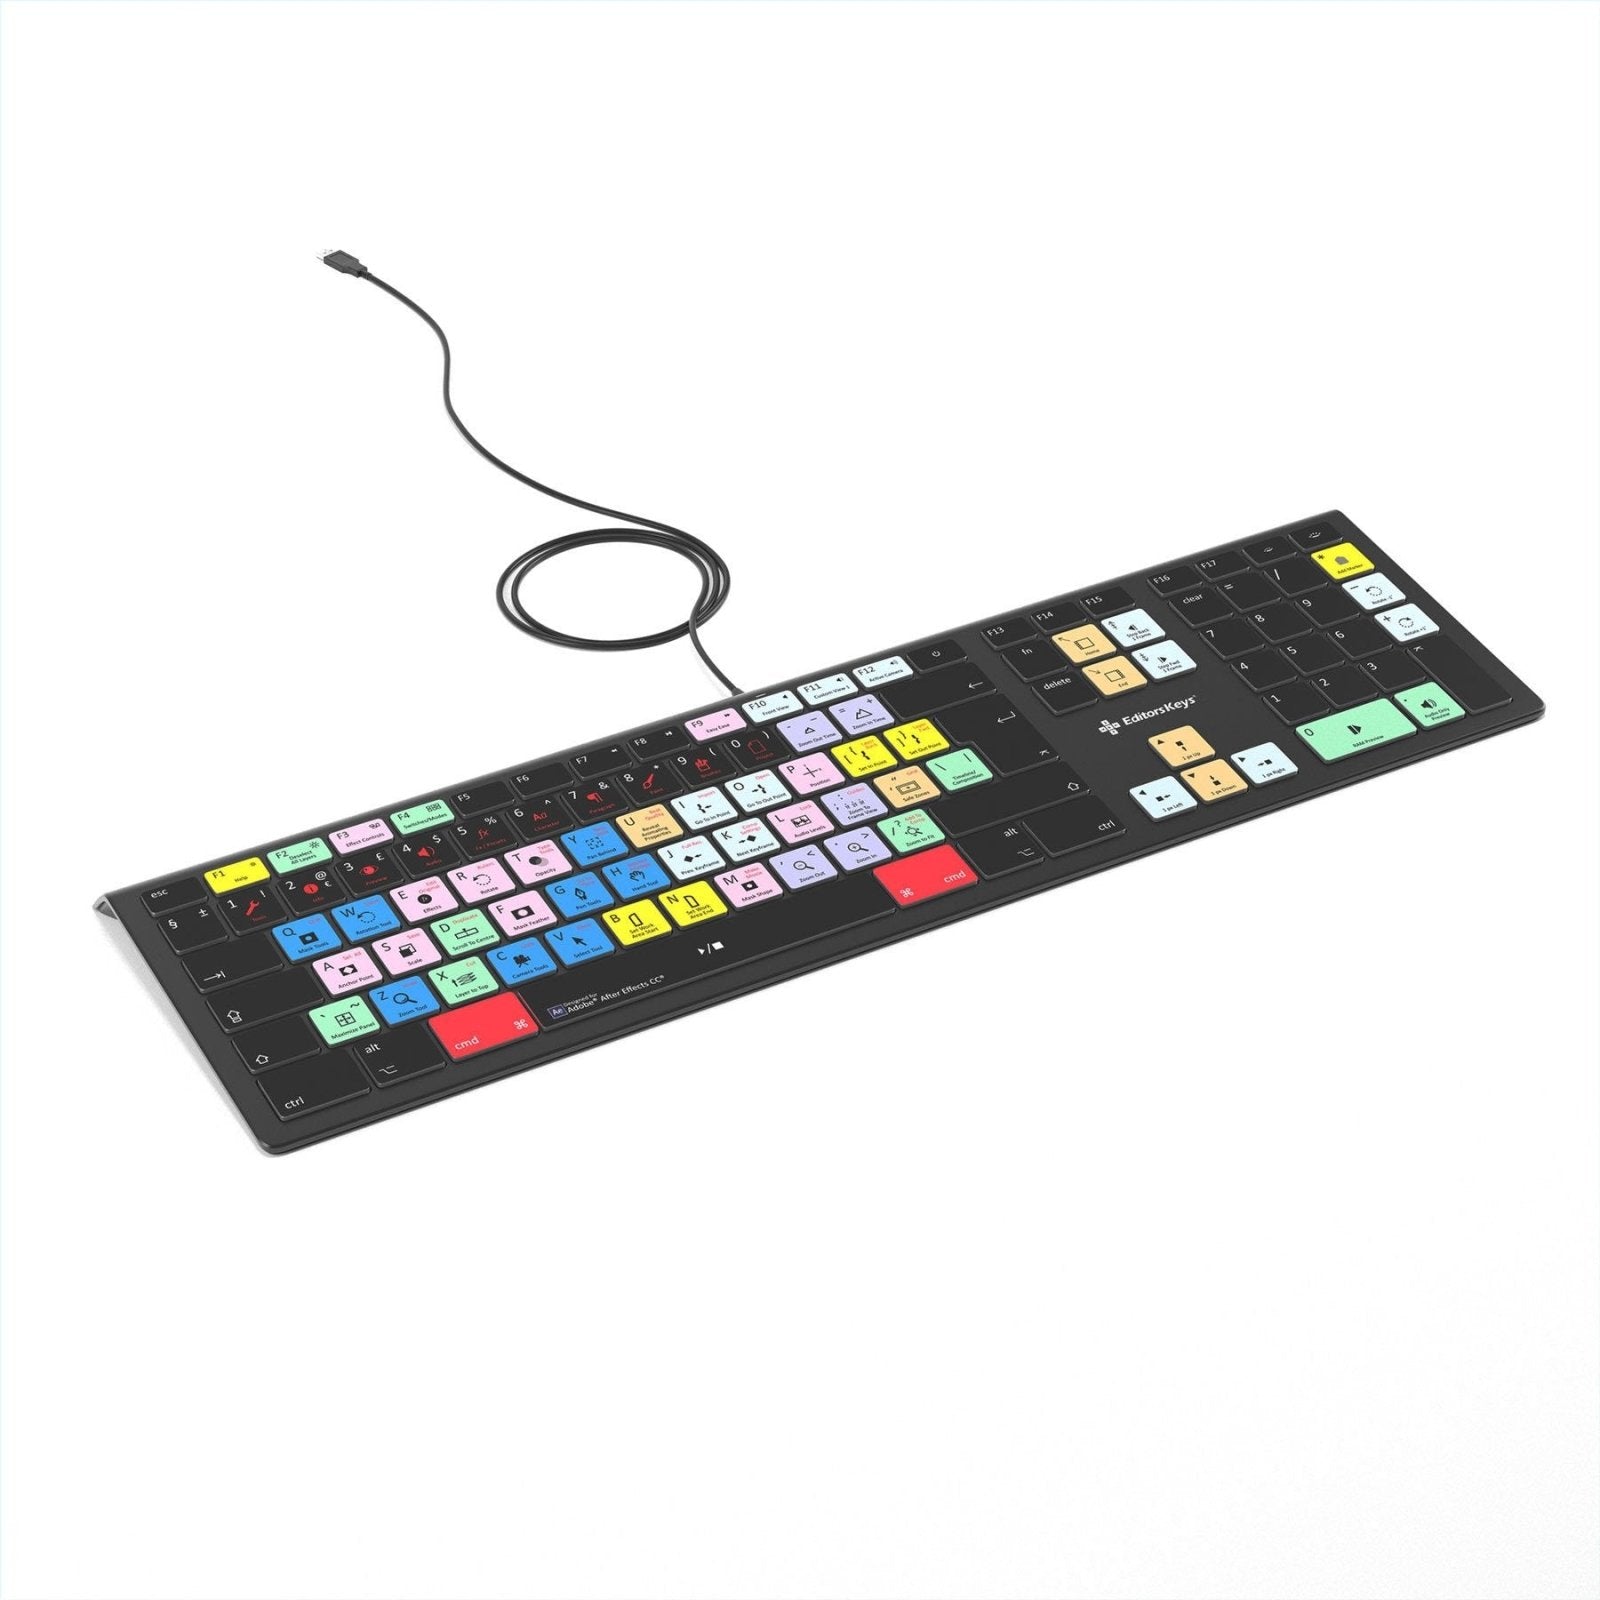 Adobe After Effects Keyboard - Backlit - For Mac or PC - Editors Keys